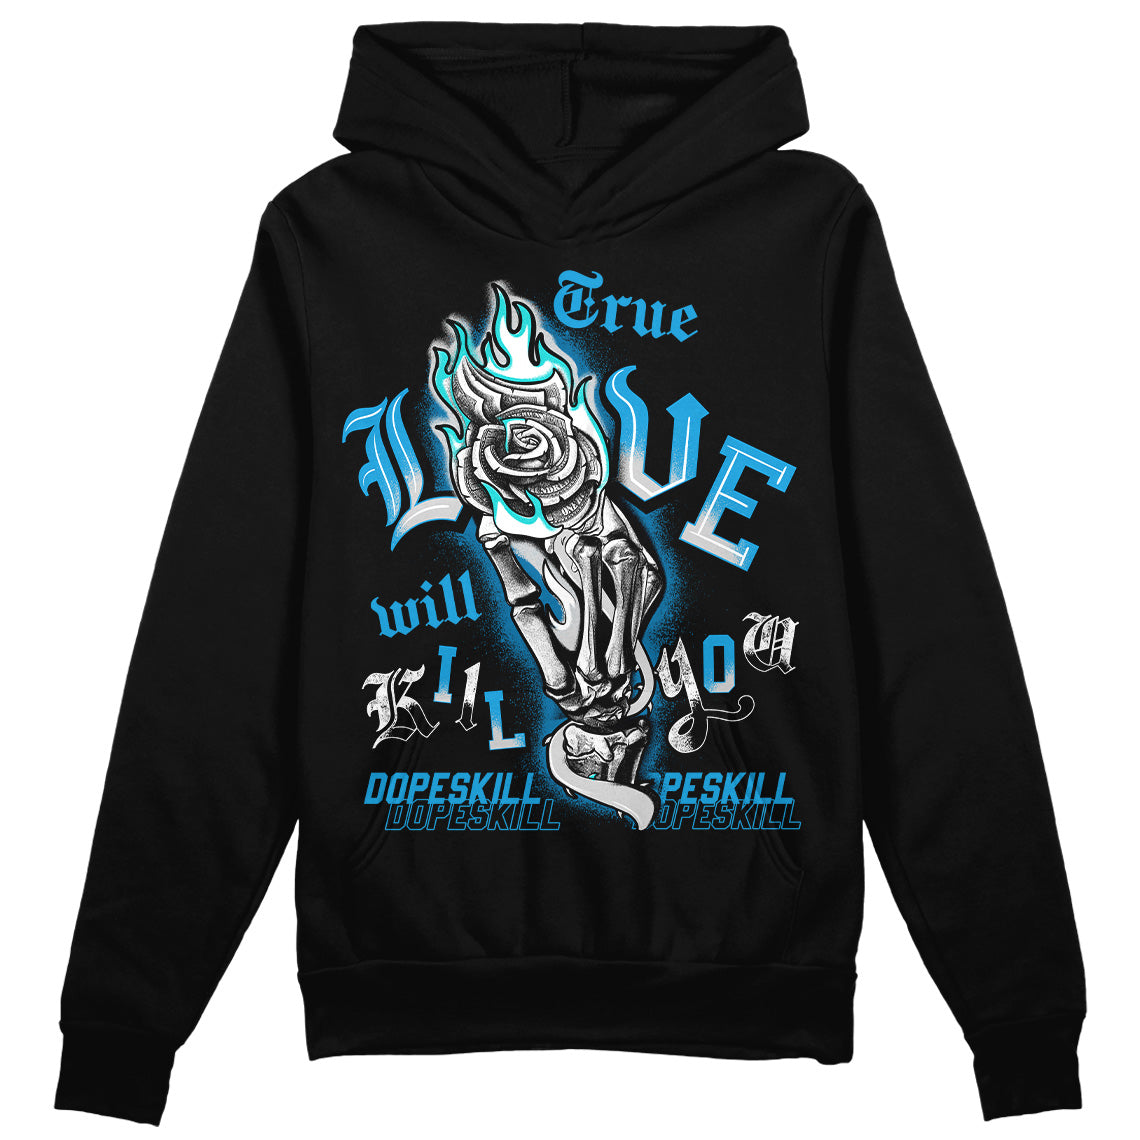 Jordan 4 Retro Military Blue DopeSkill Hoodie Sweatshirt True Love Will Kill You Graphic Streetwear - Black